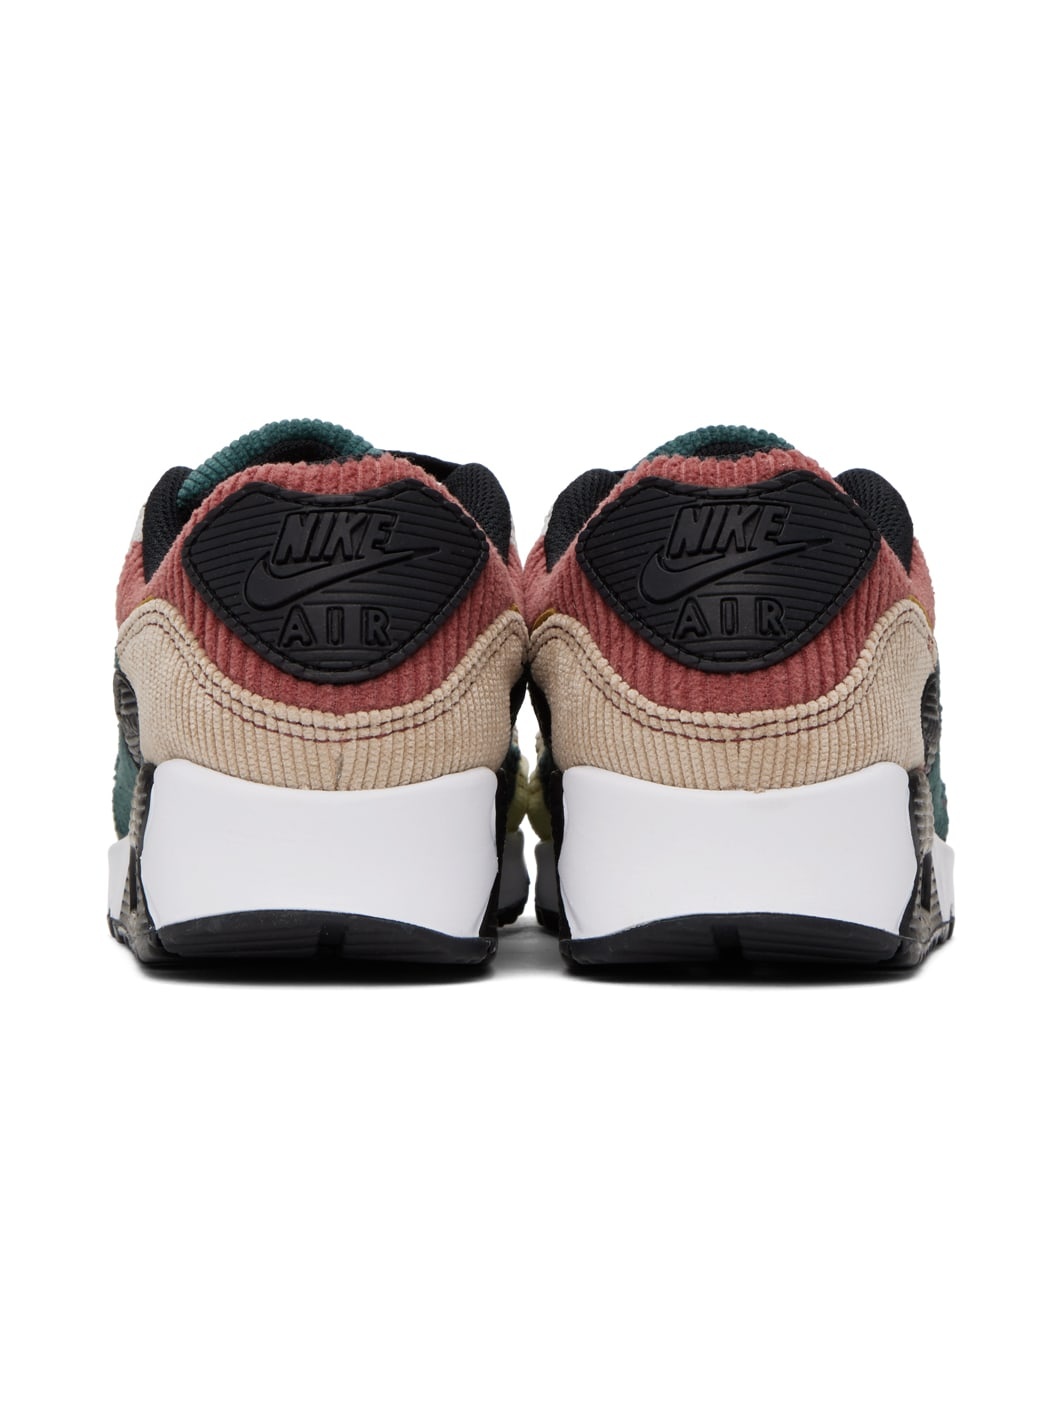 Multicolor Air Max 90 Sneakers - 2